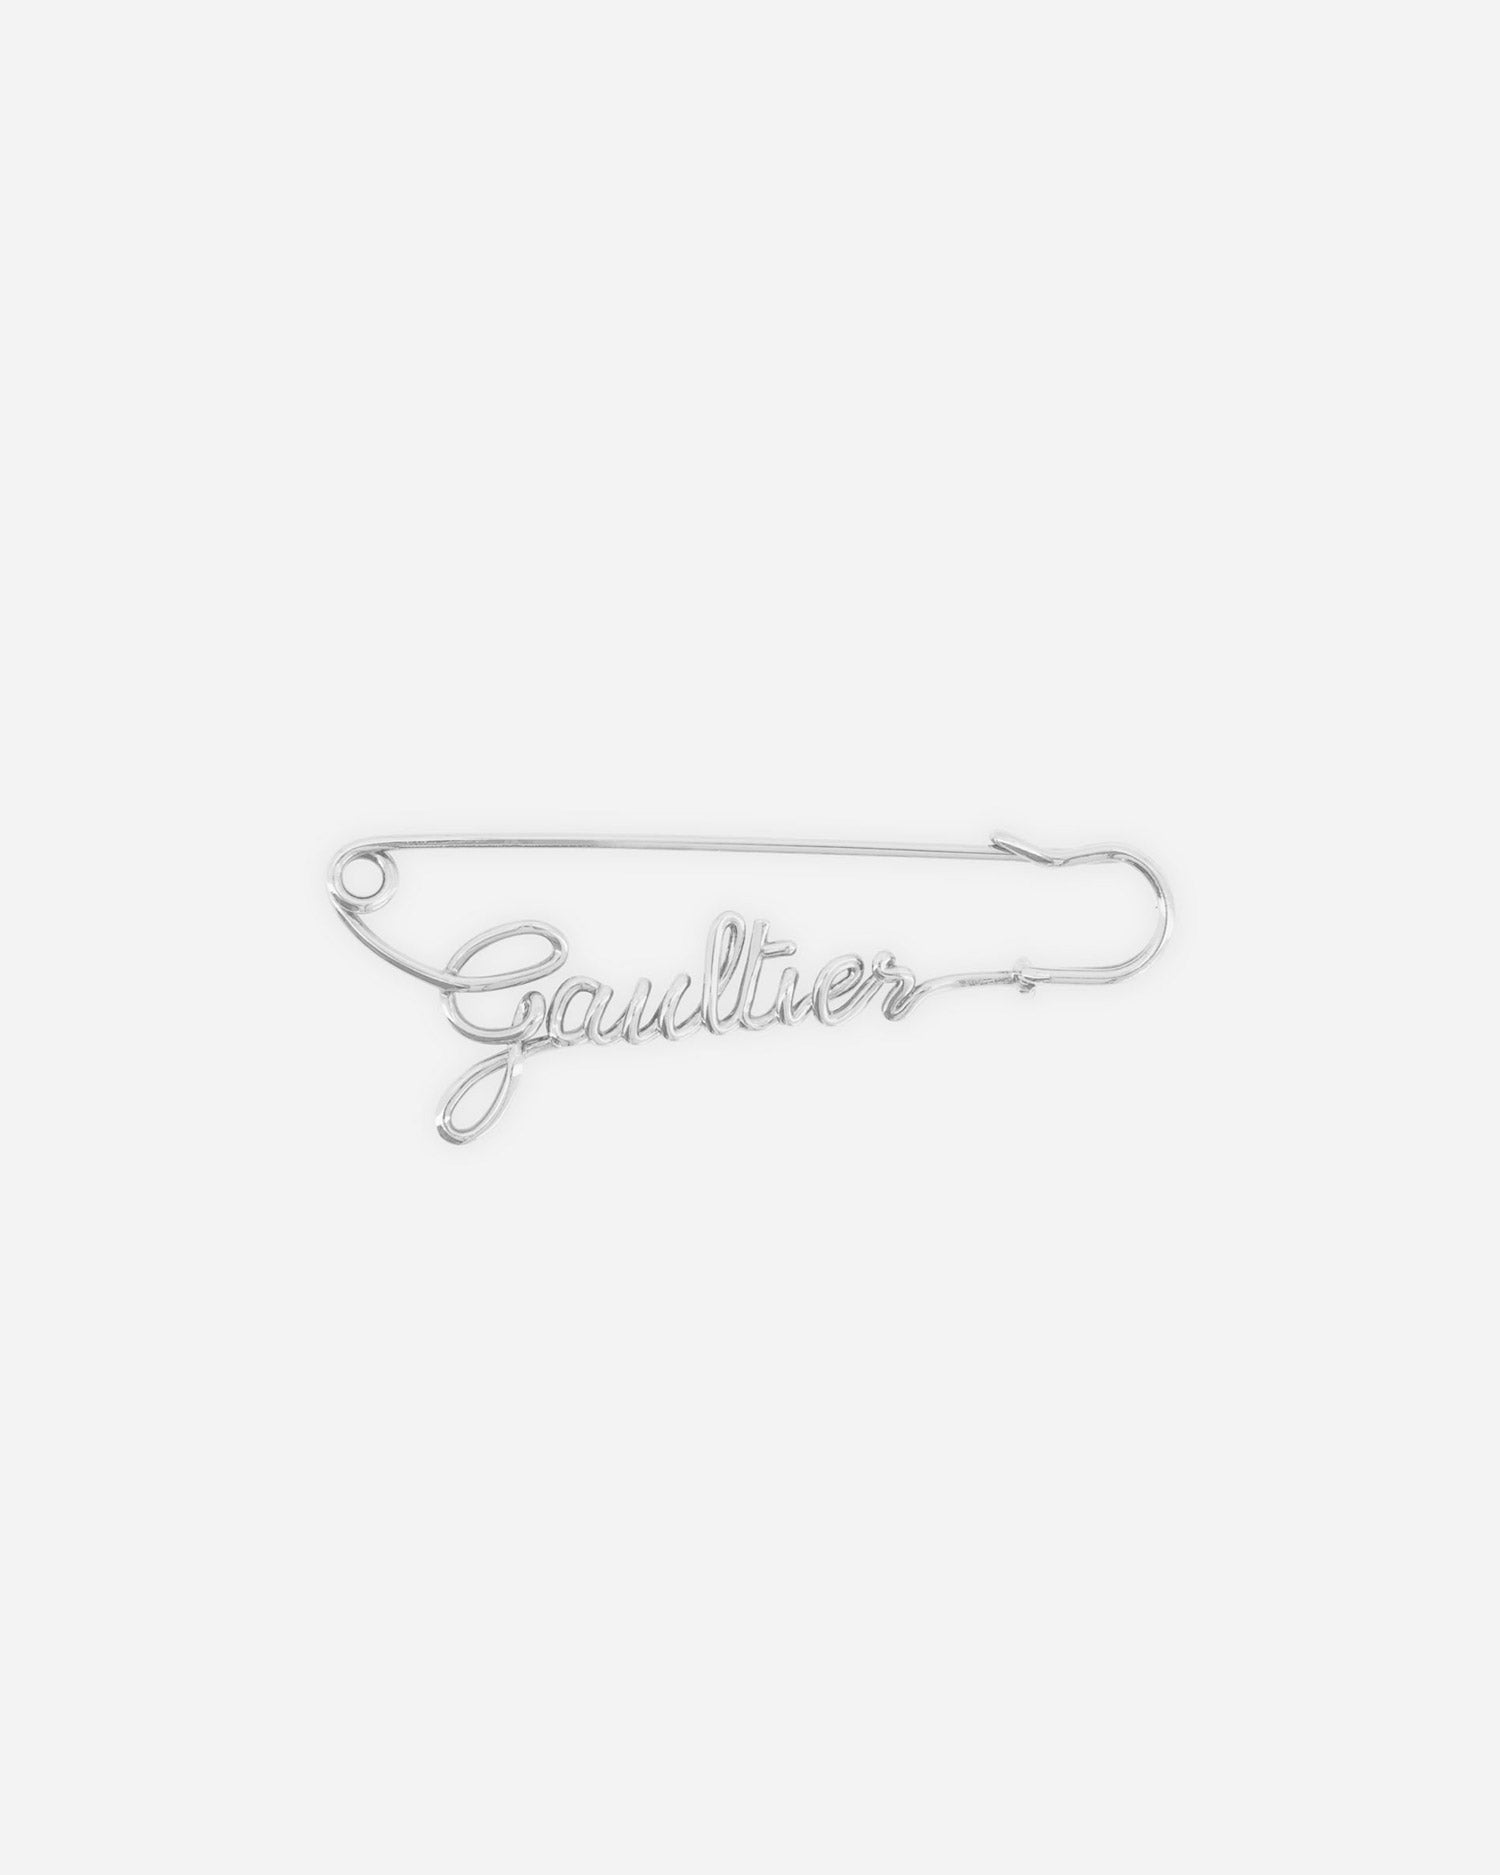 Gaultier Safety Pin - Dresses & Skirts - Jean Paul Gaultier - Elevastor